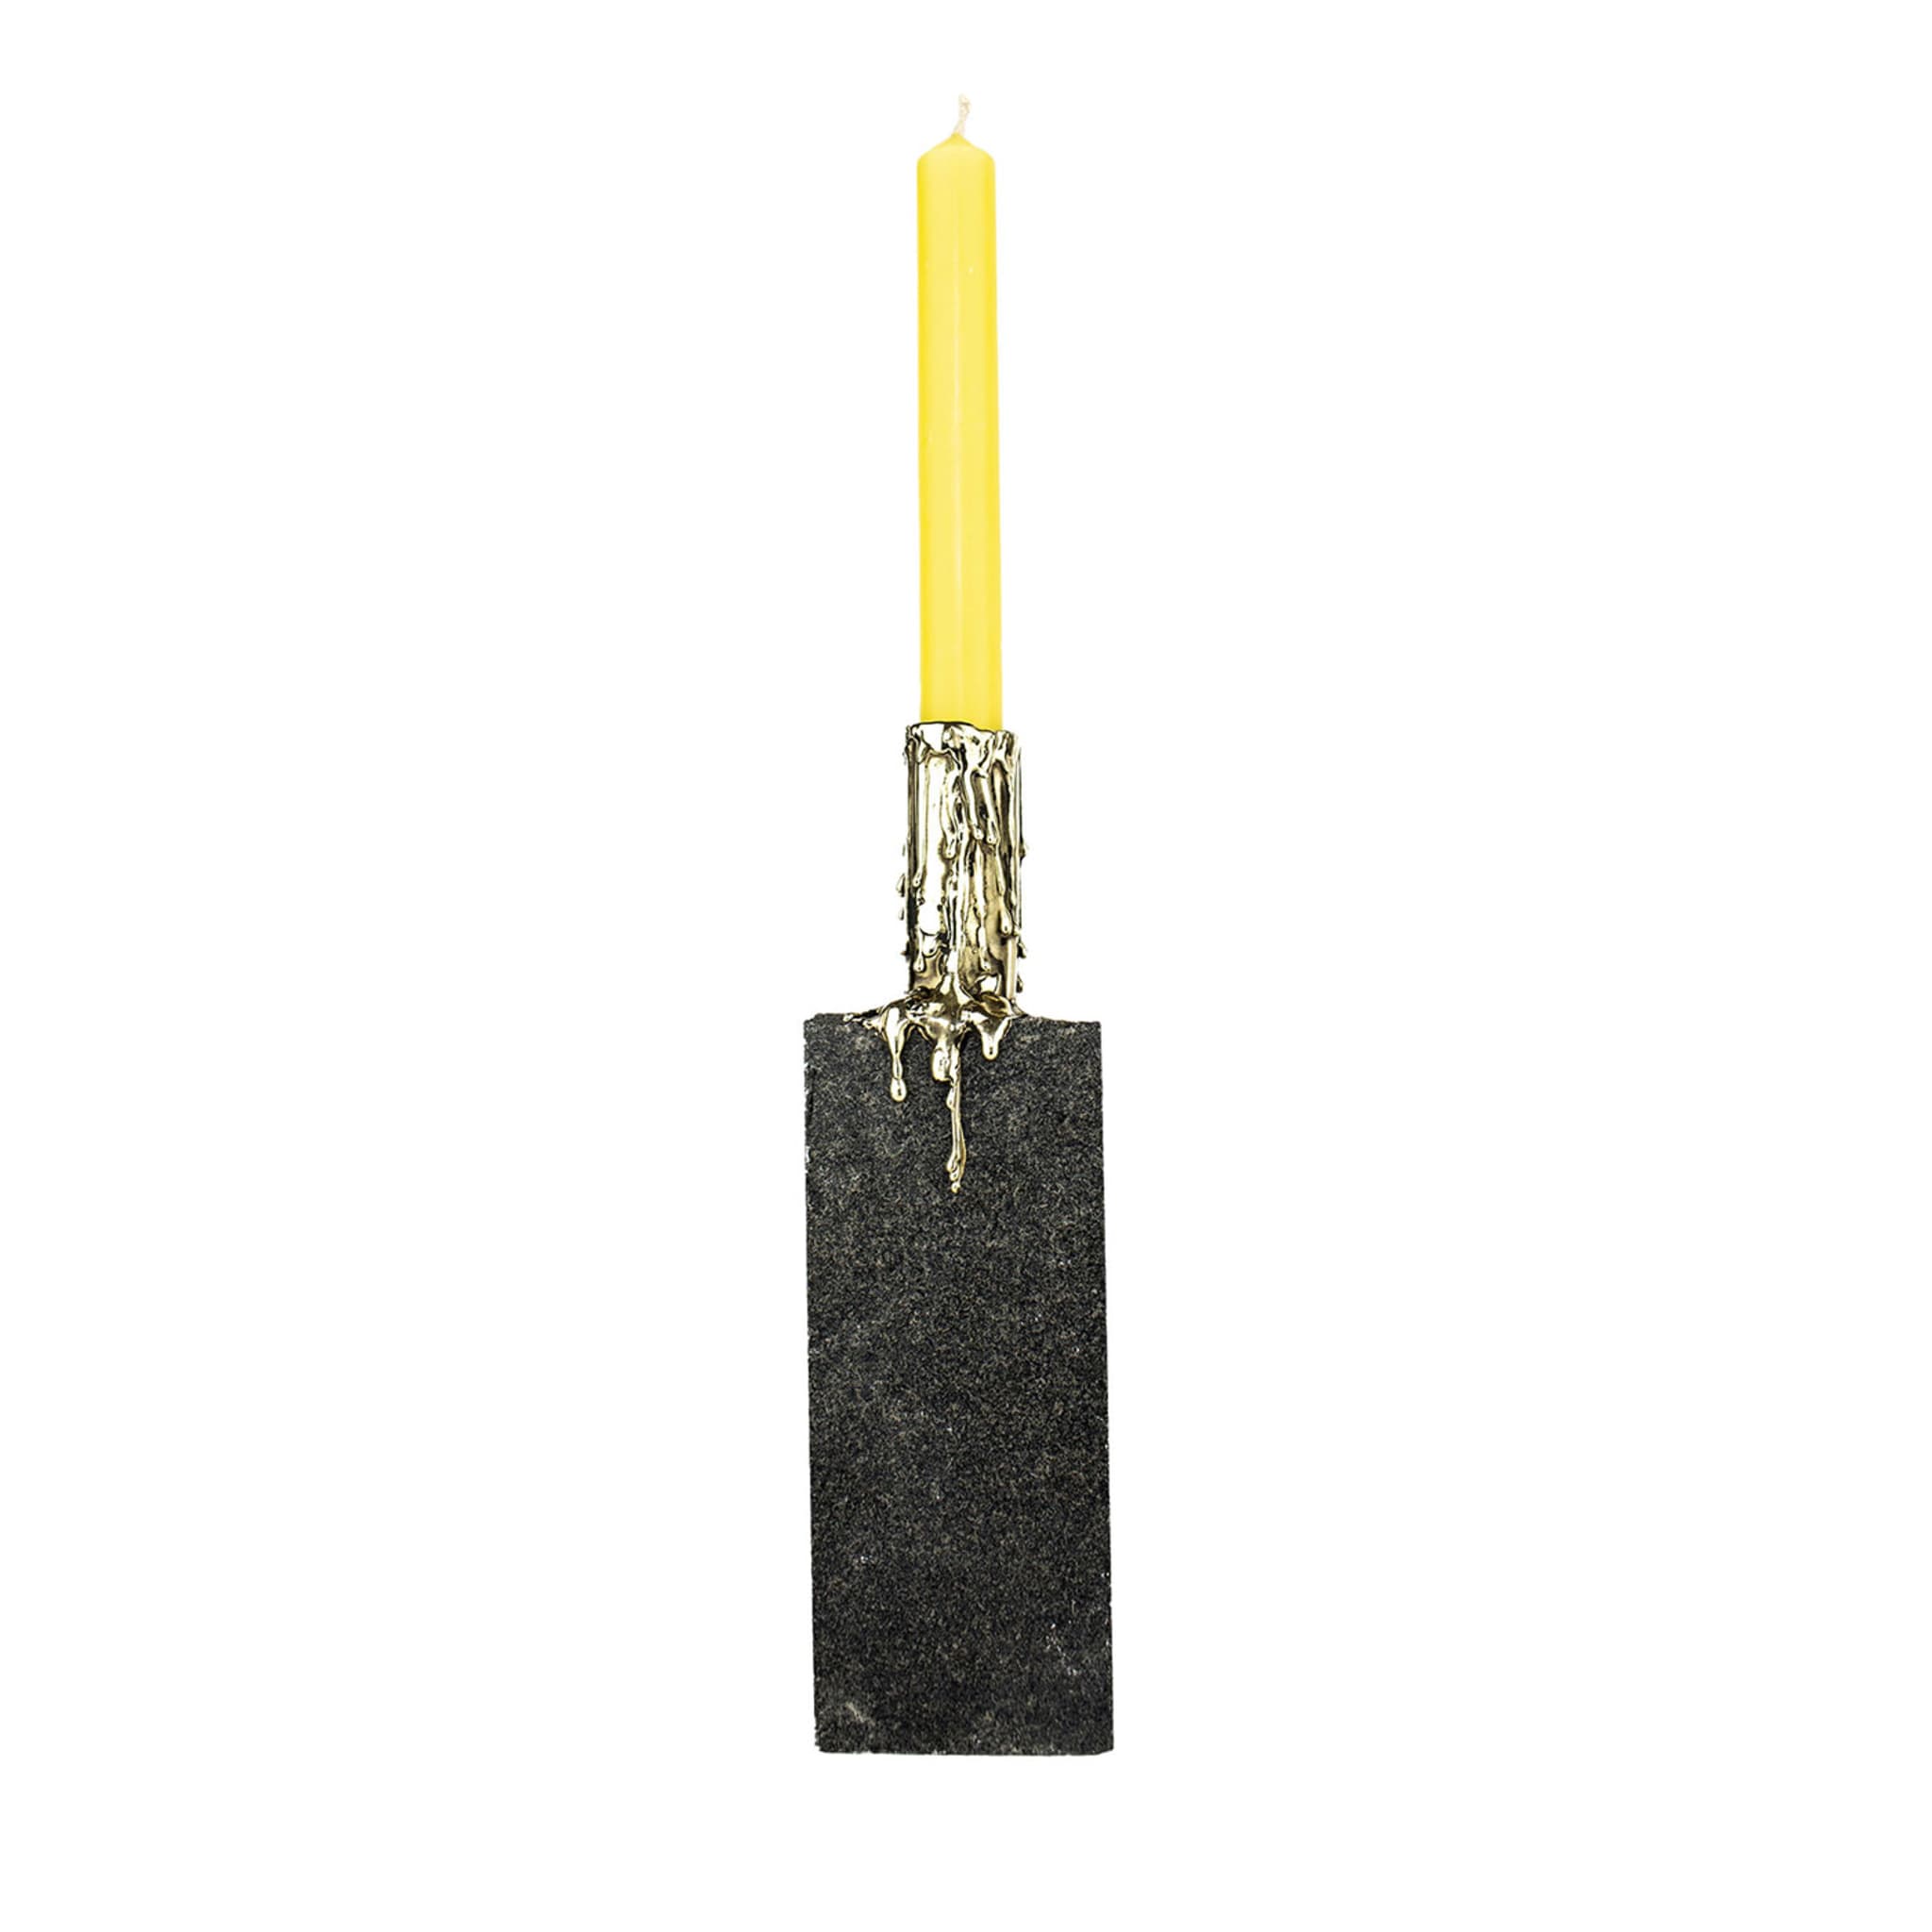 Black candelabrum #2 - Main view